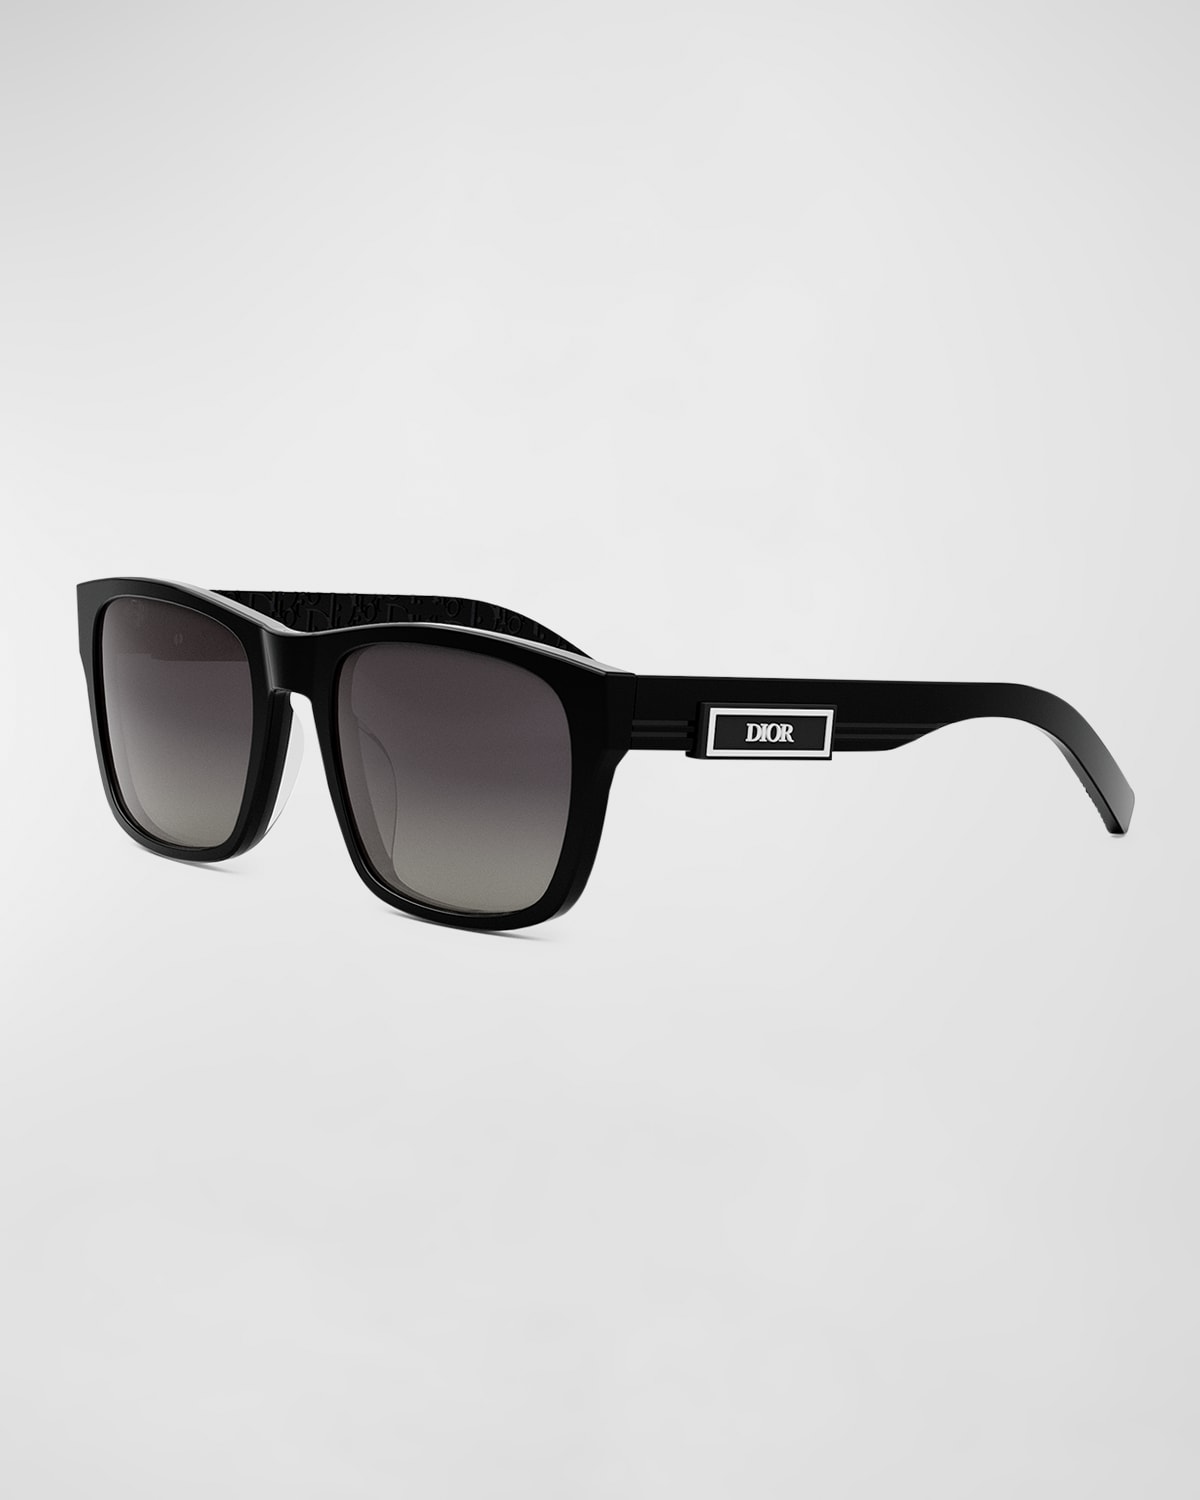 Dior B23 S2f Geometric Sunglasses, 58mm In Black/gray Gradient